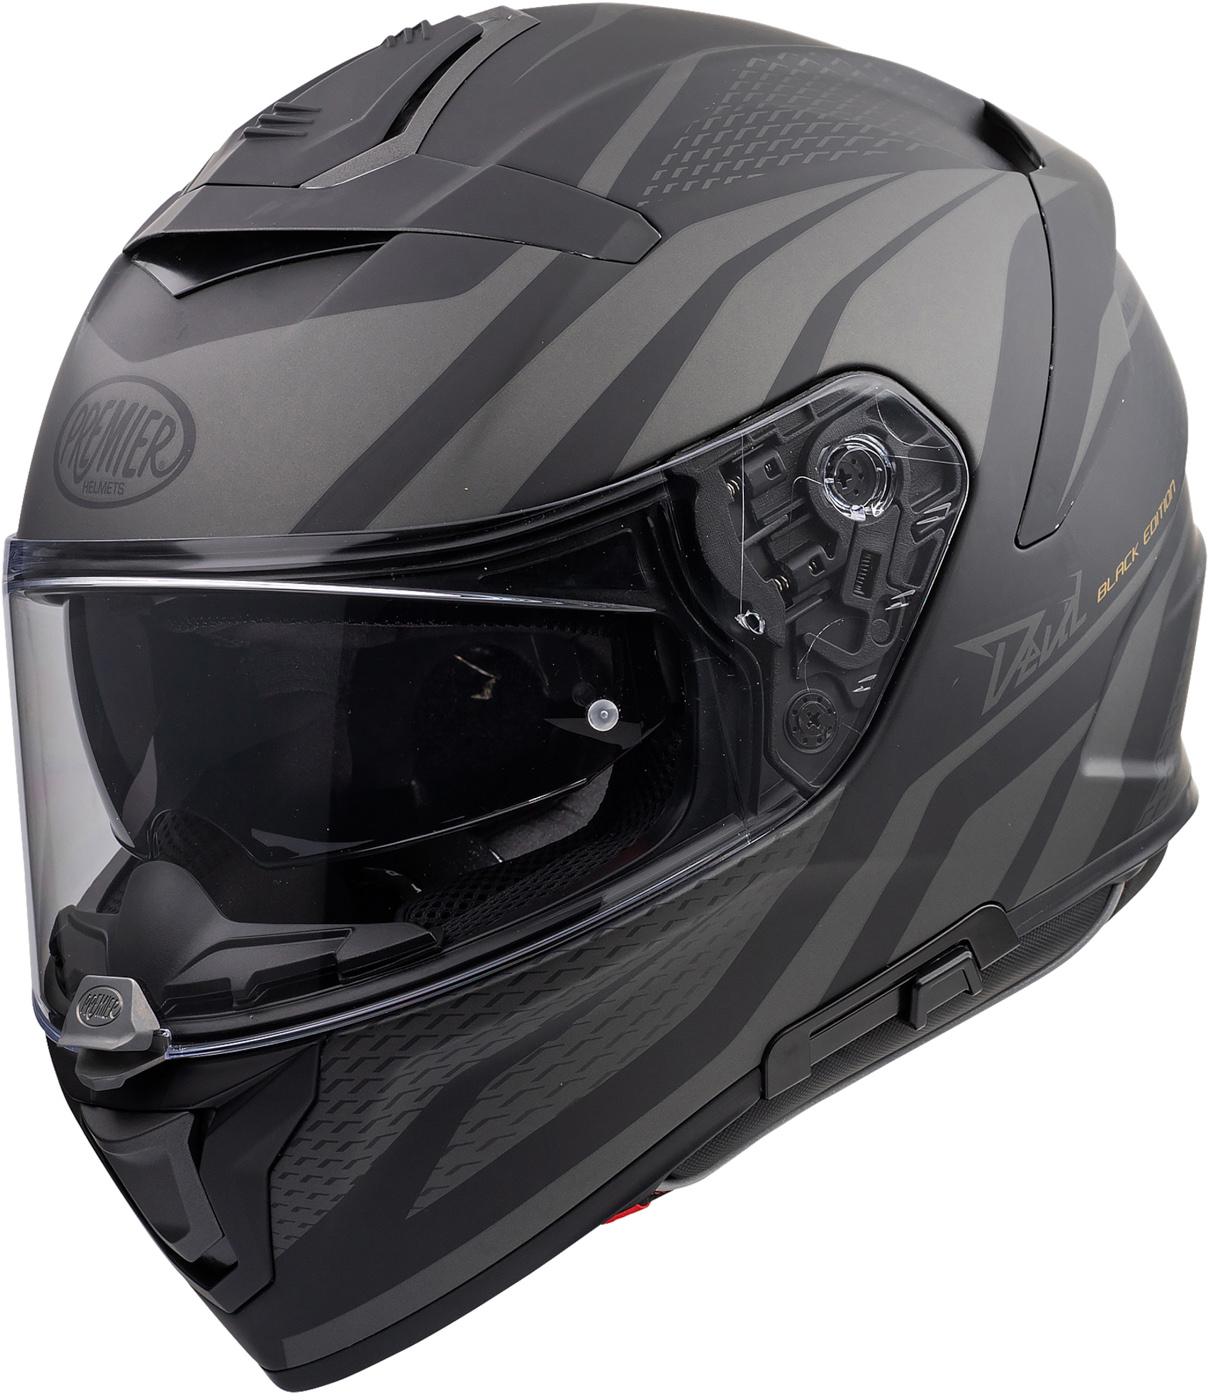 Premier Devil Pr Full Face Motorcycle Helmet - Matt Black, L